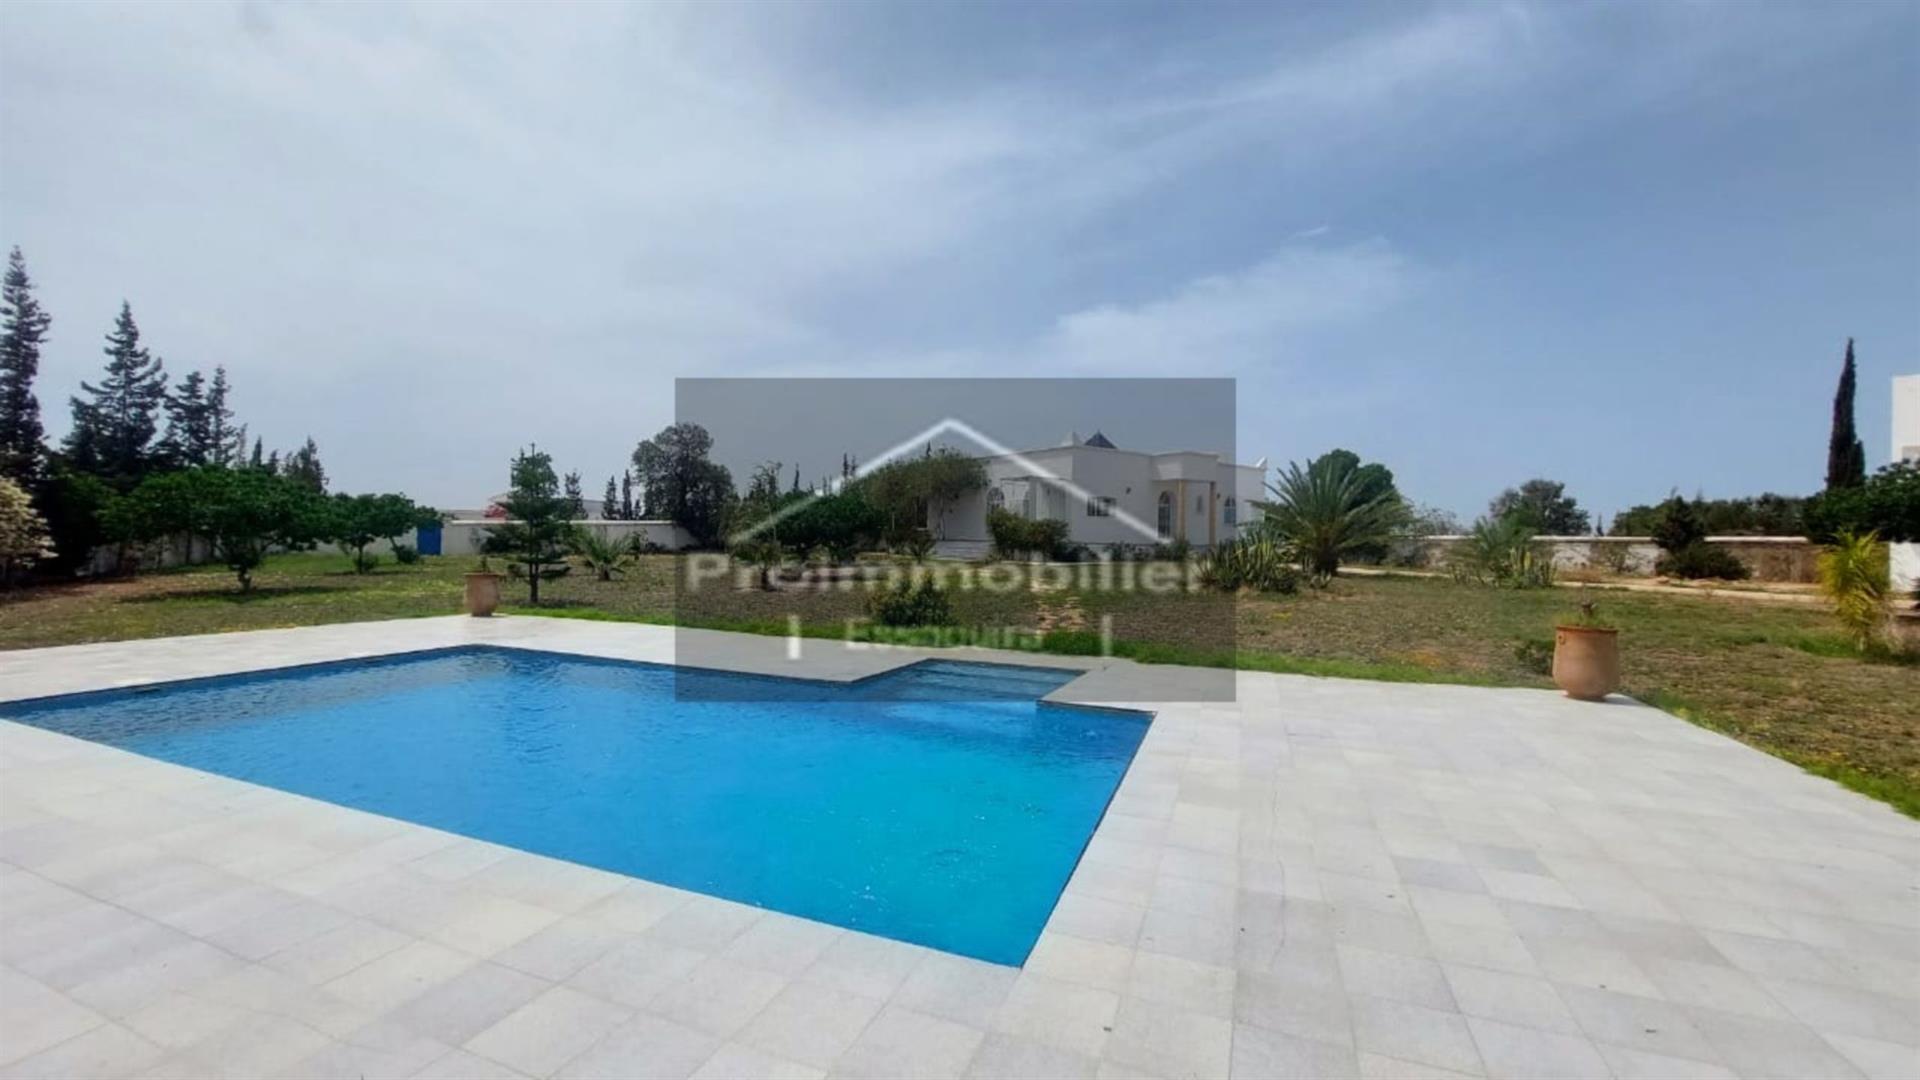 24-04-01-VM Prachtig landhuis van 170 m² te koop in Essaouira Terrein 5226 m²